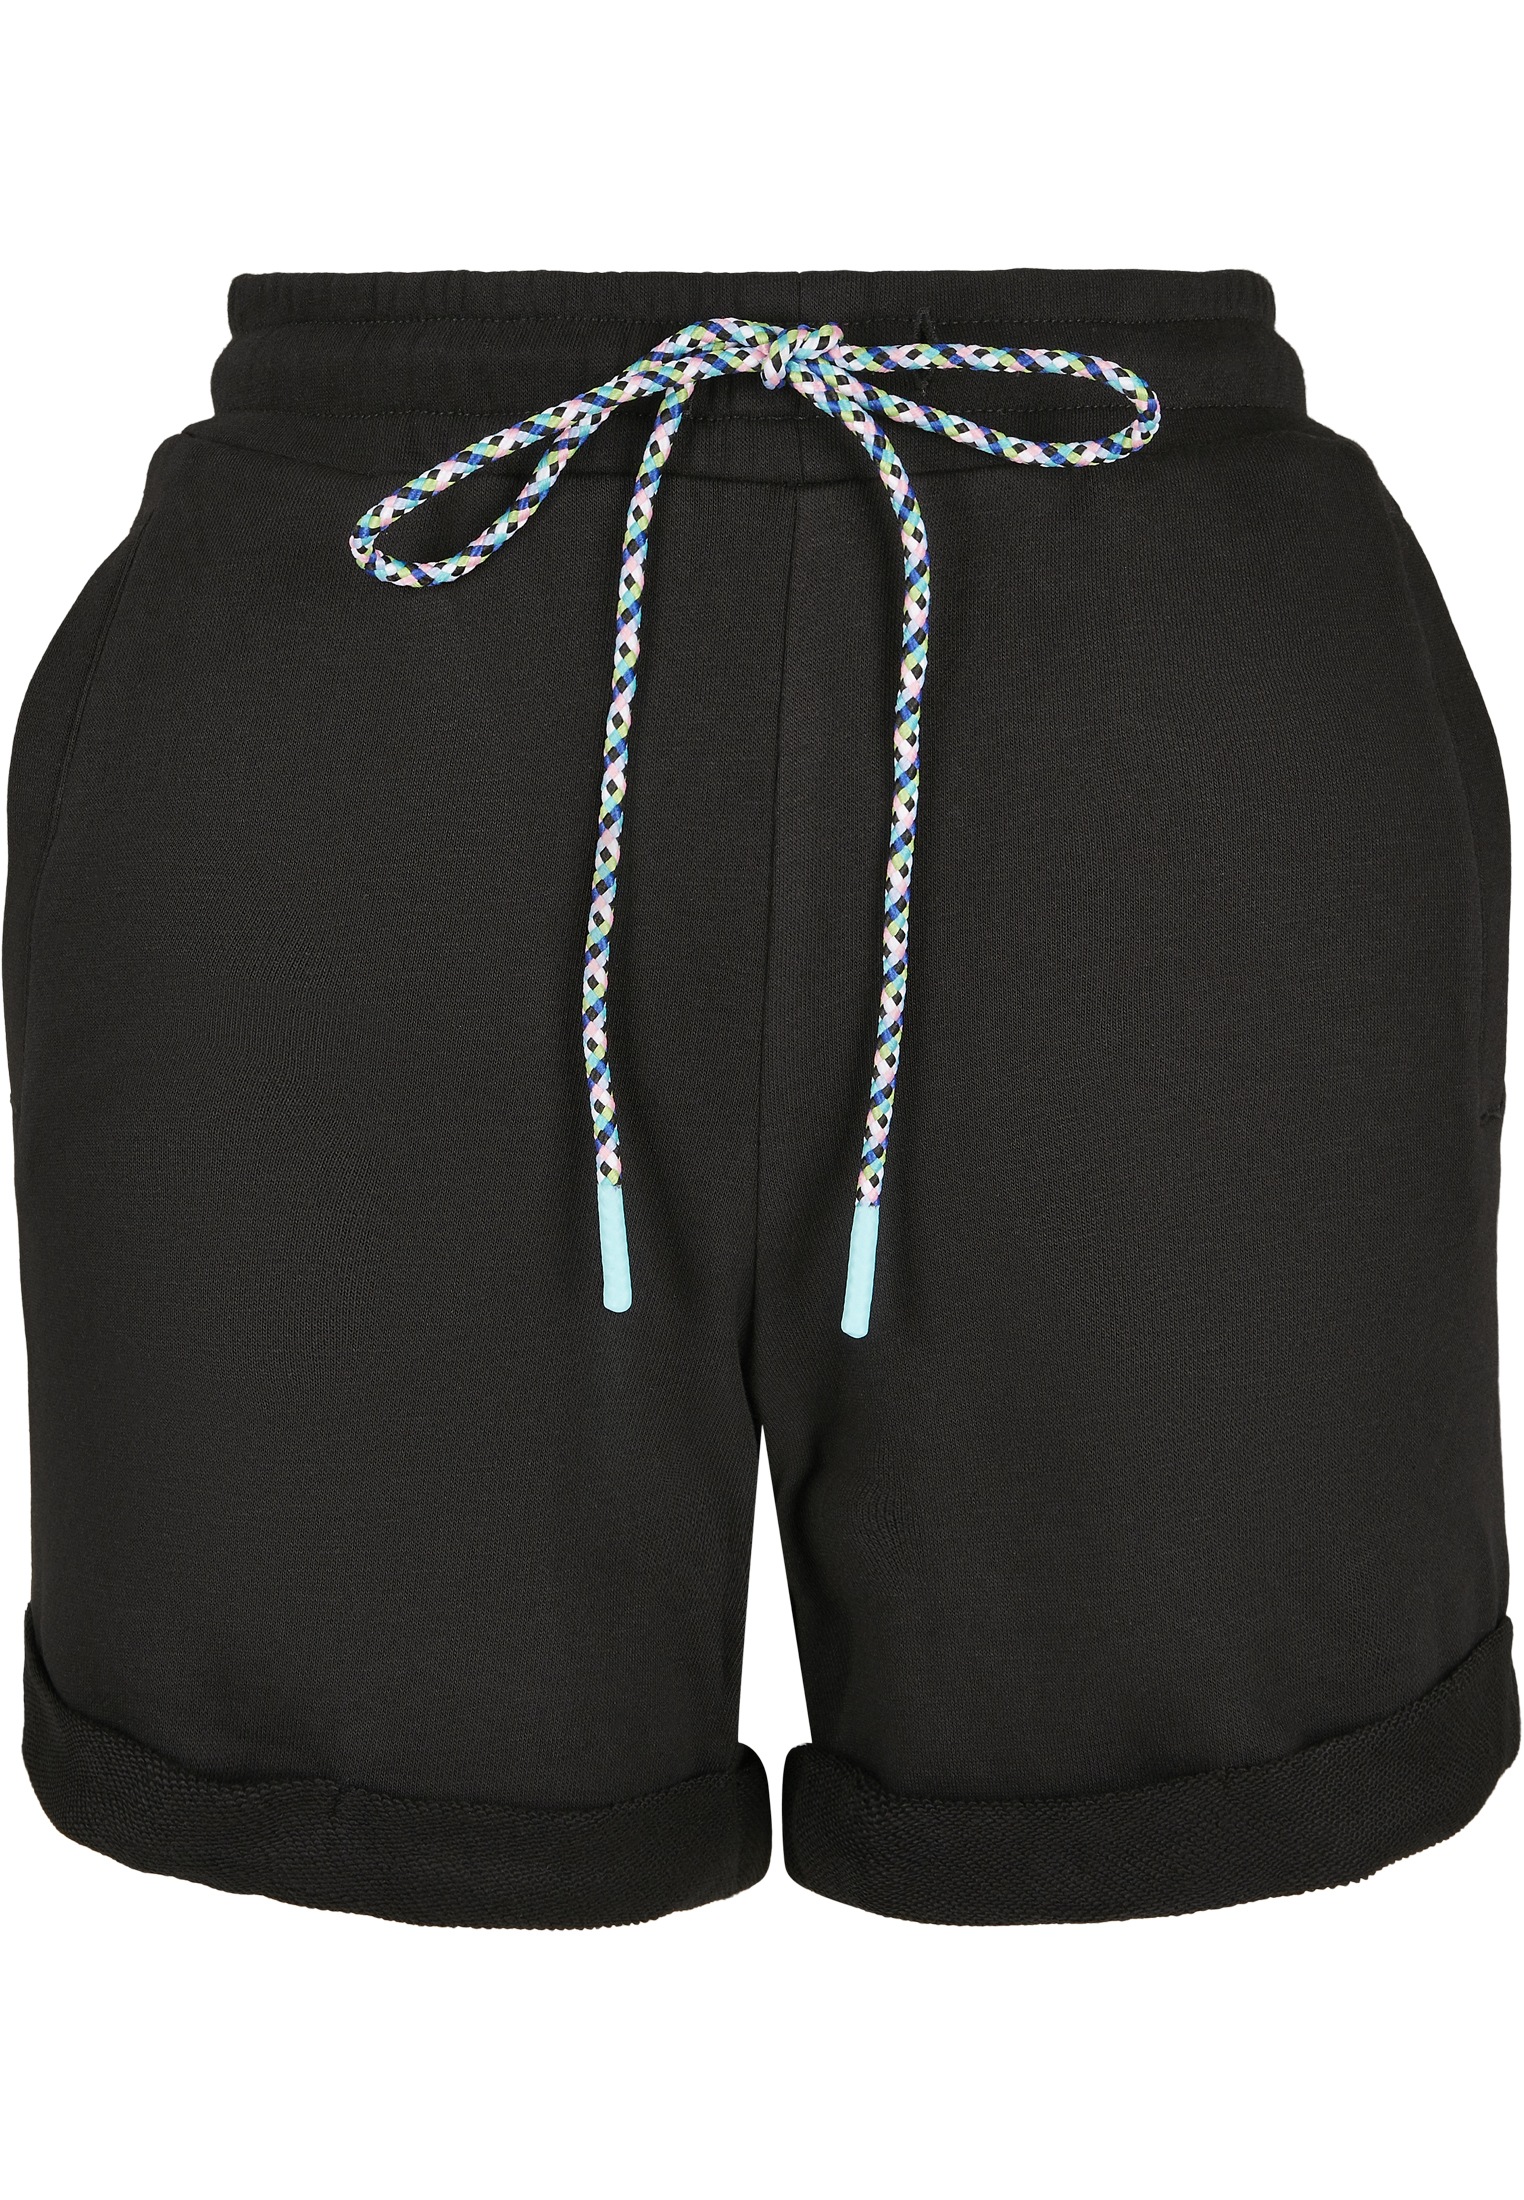 (1 URBAN tlg.) »Damen Terry Ladies CLASSICS Stoffhose Shorts«, Beach shoppen